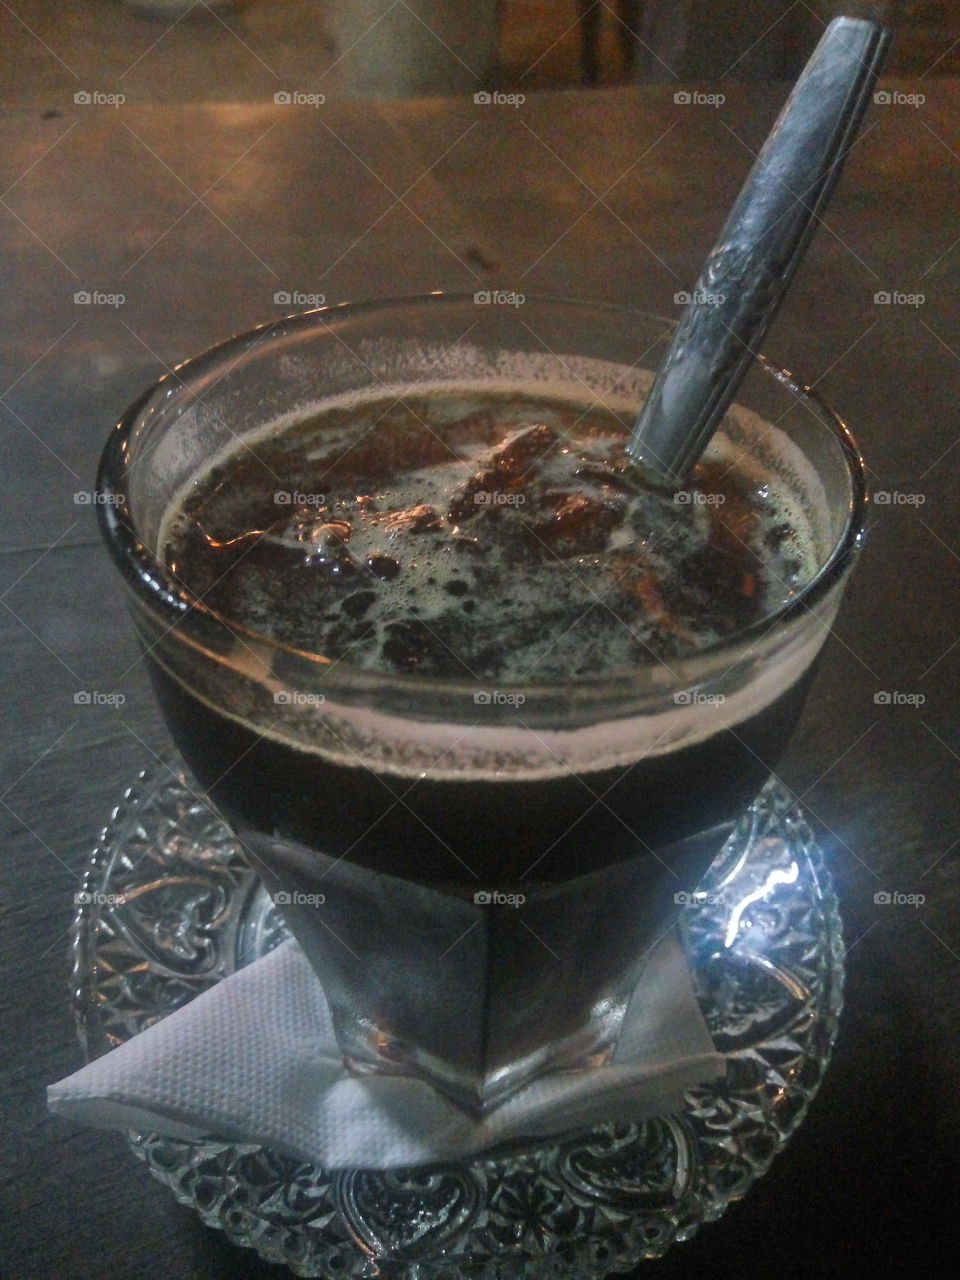 Indonesian coffee